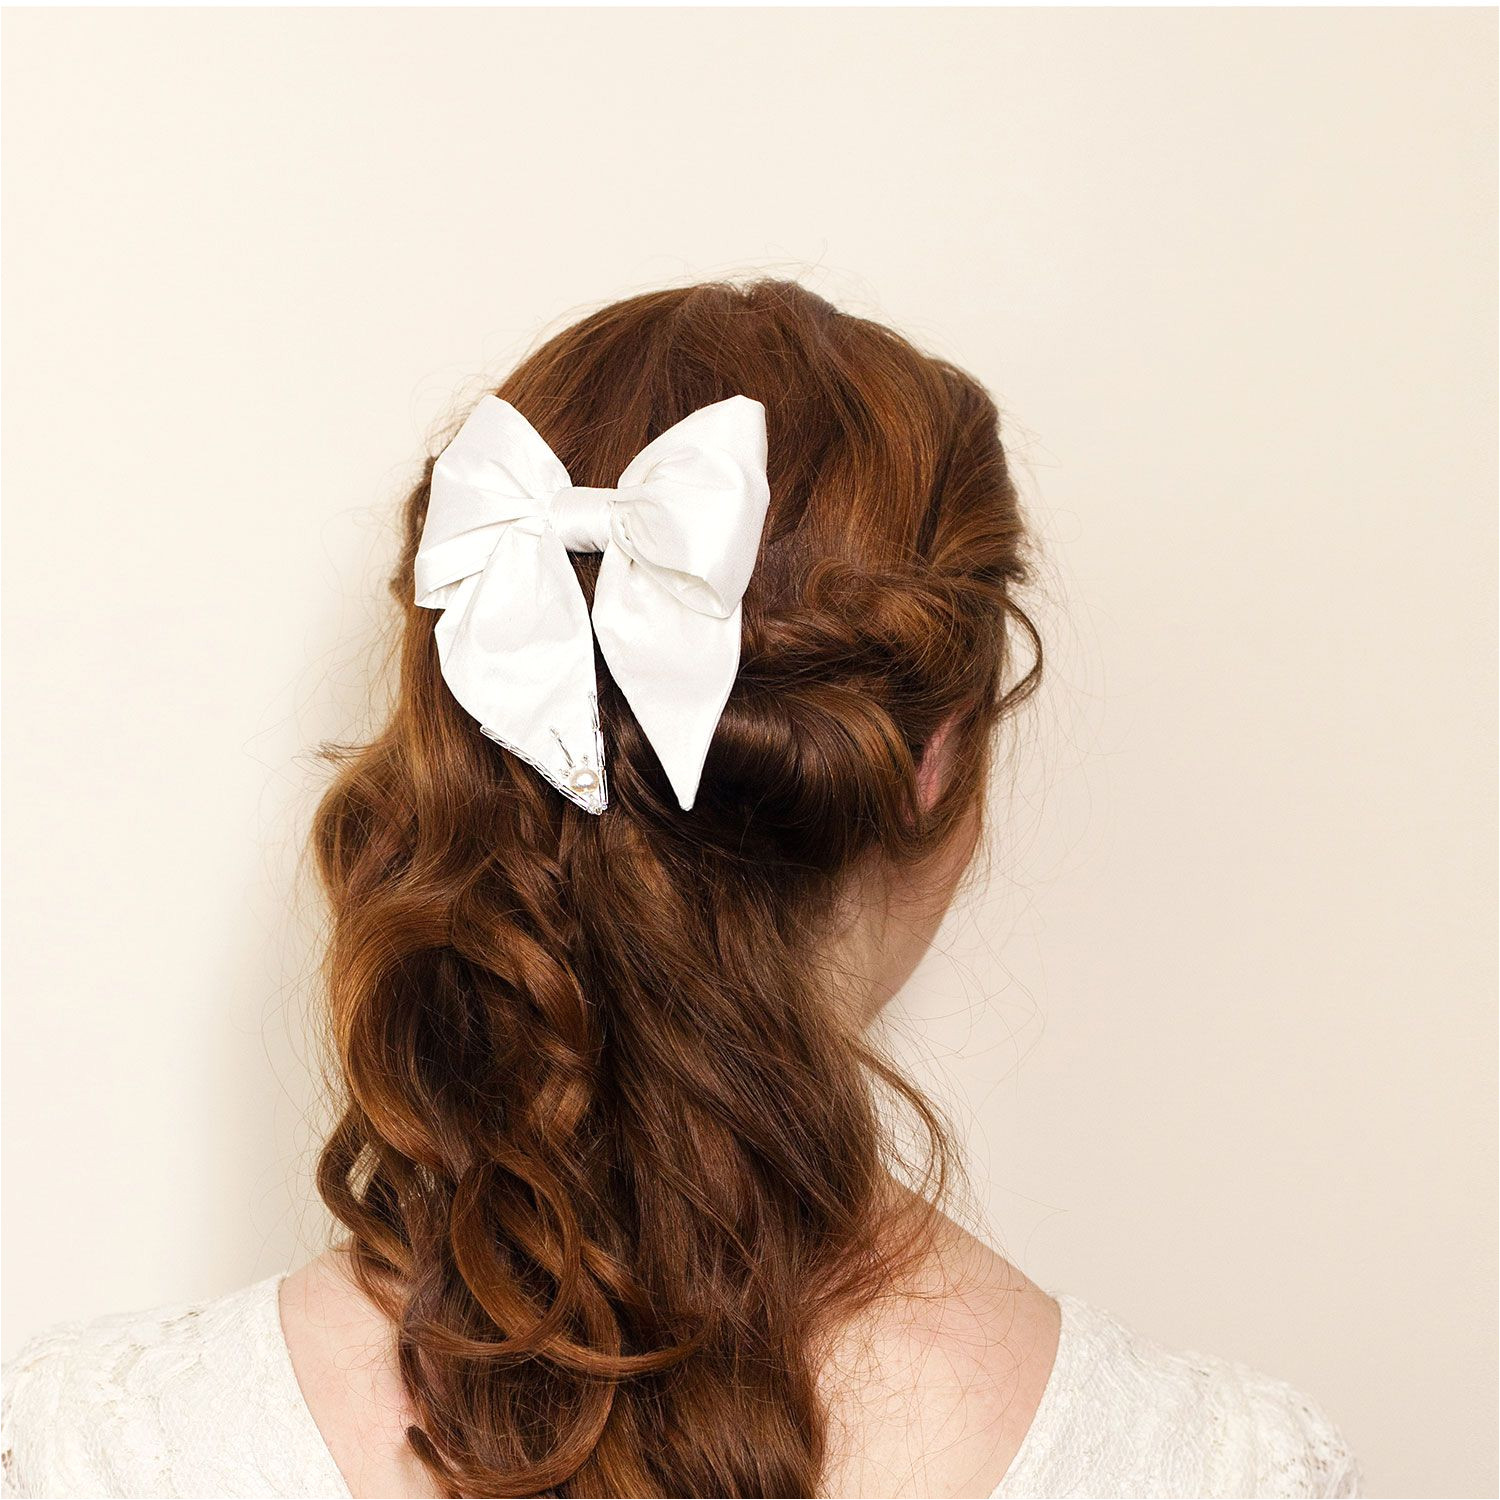 Simple cute bridal hair bow clip with sparkle detail by Blackbird s Pearl London